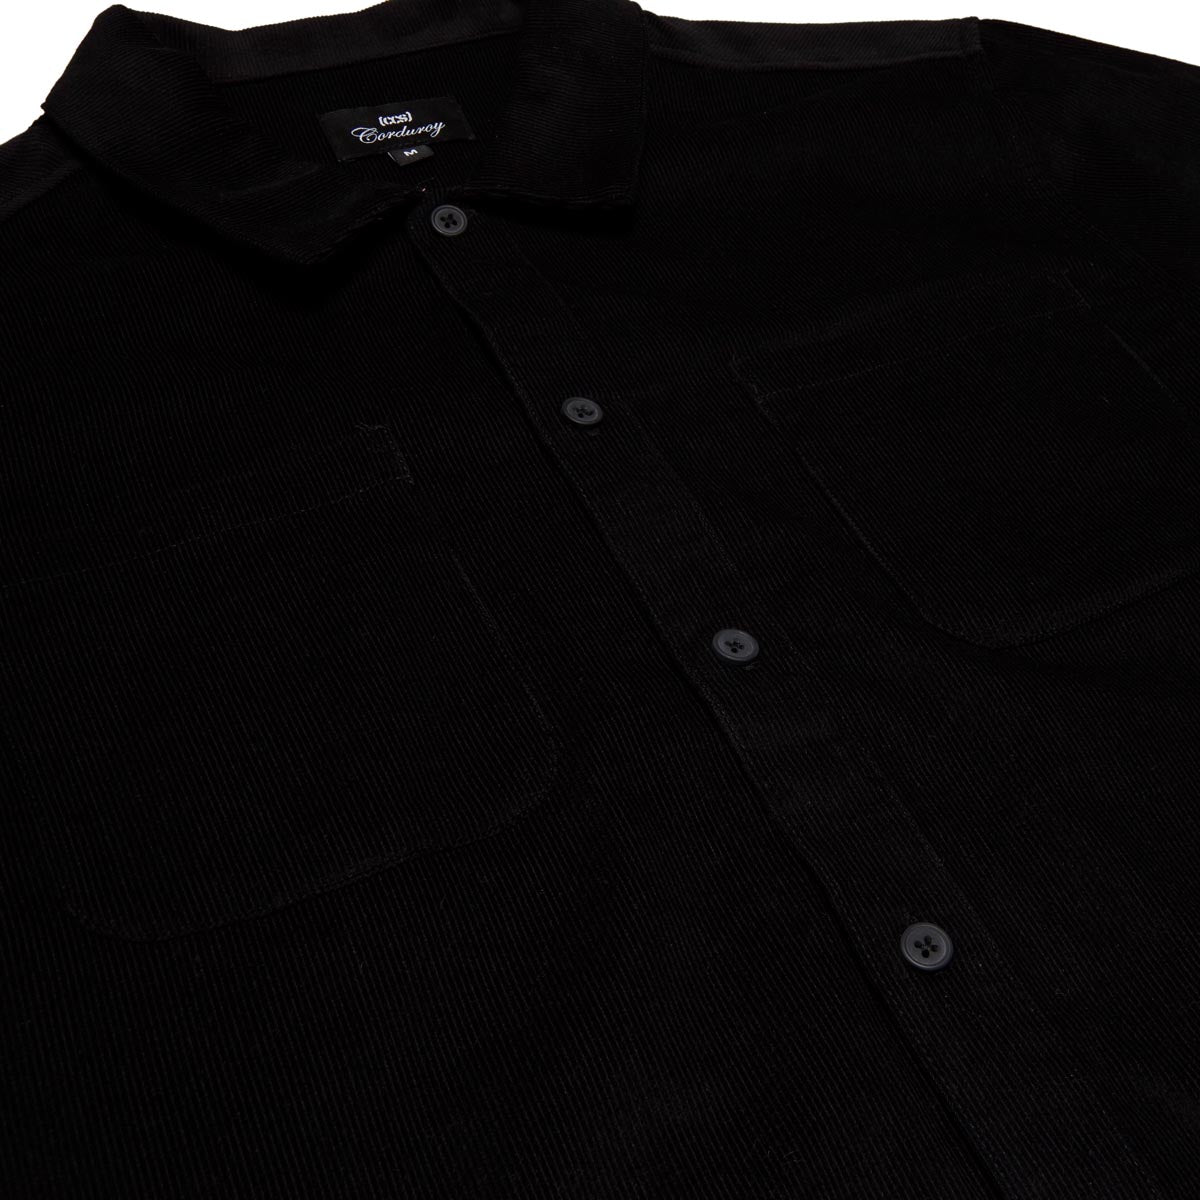 CCS Long Sleeve Corduroy Shirt - Black image 4